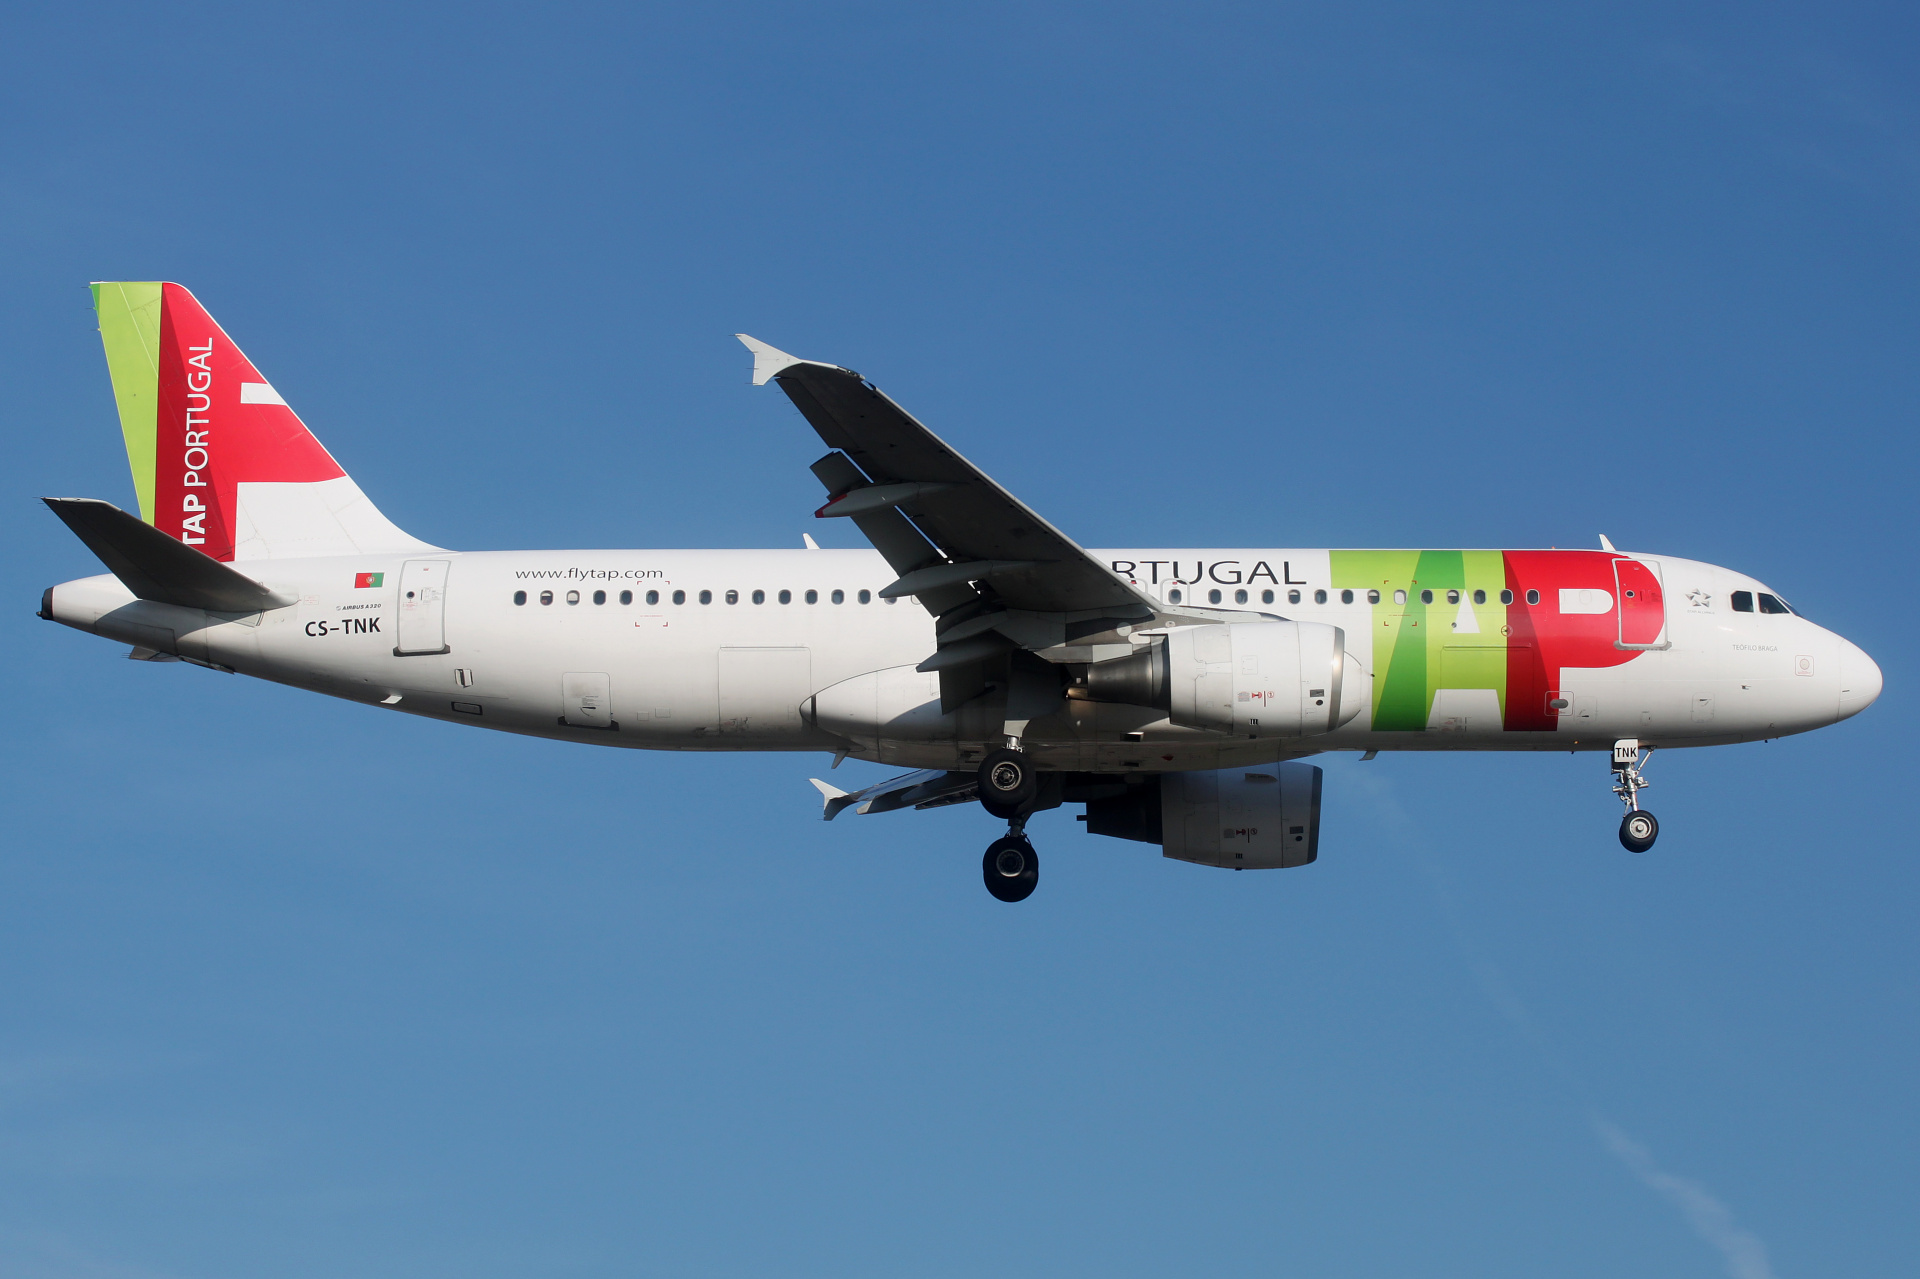 CS-TNK (Aircraft » EPWA Spotting » Airbus A320-200 » TAP Air Portugal)